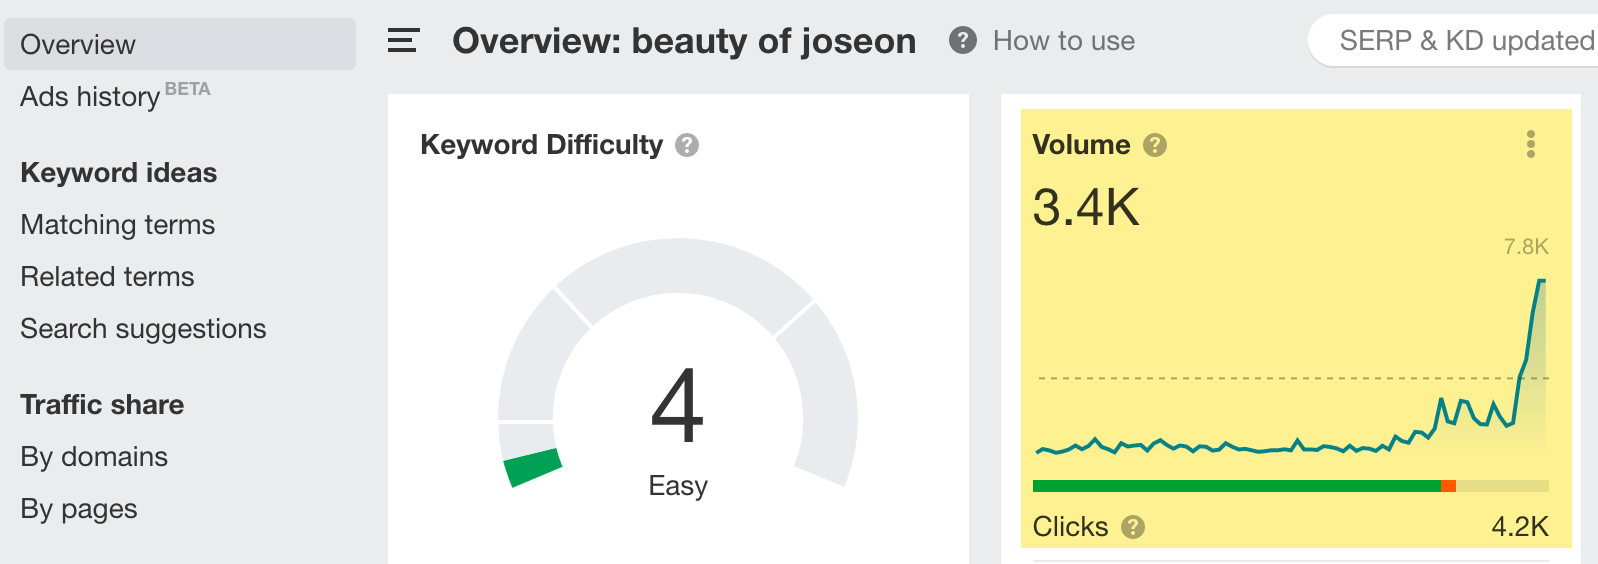 KD و حجم جستجوی کلمه کلیدی "زیبایی جوسون،" از طریق Ahrefs' Keywords Explorer